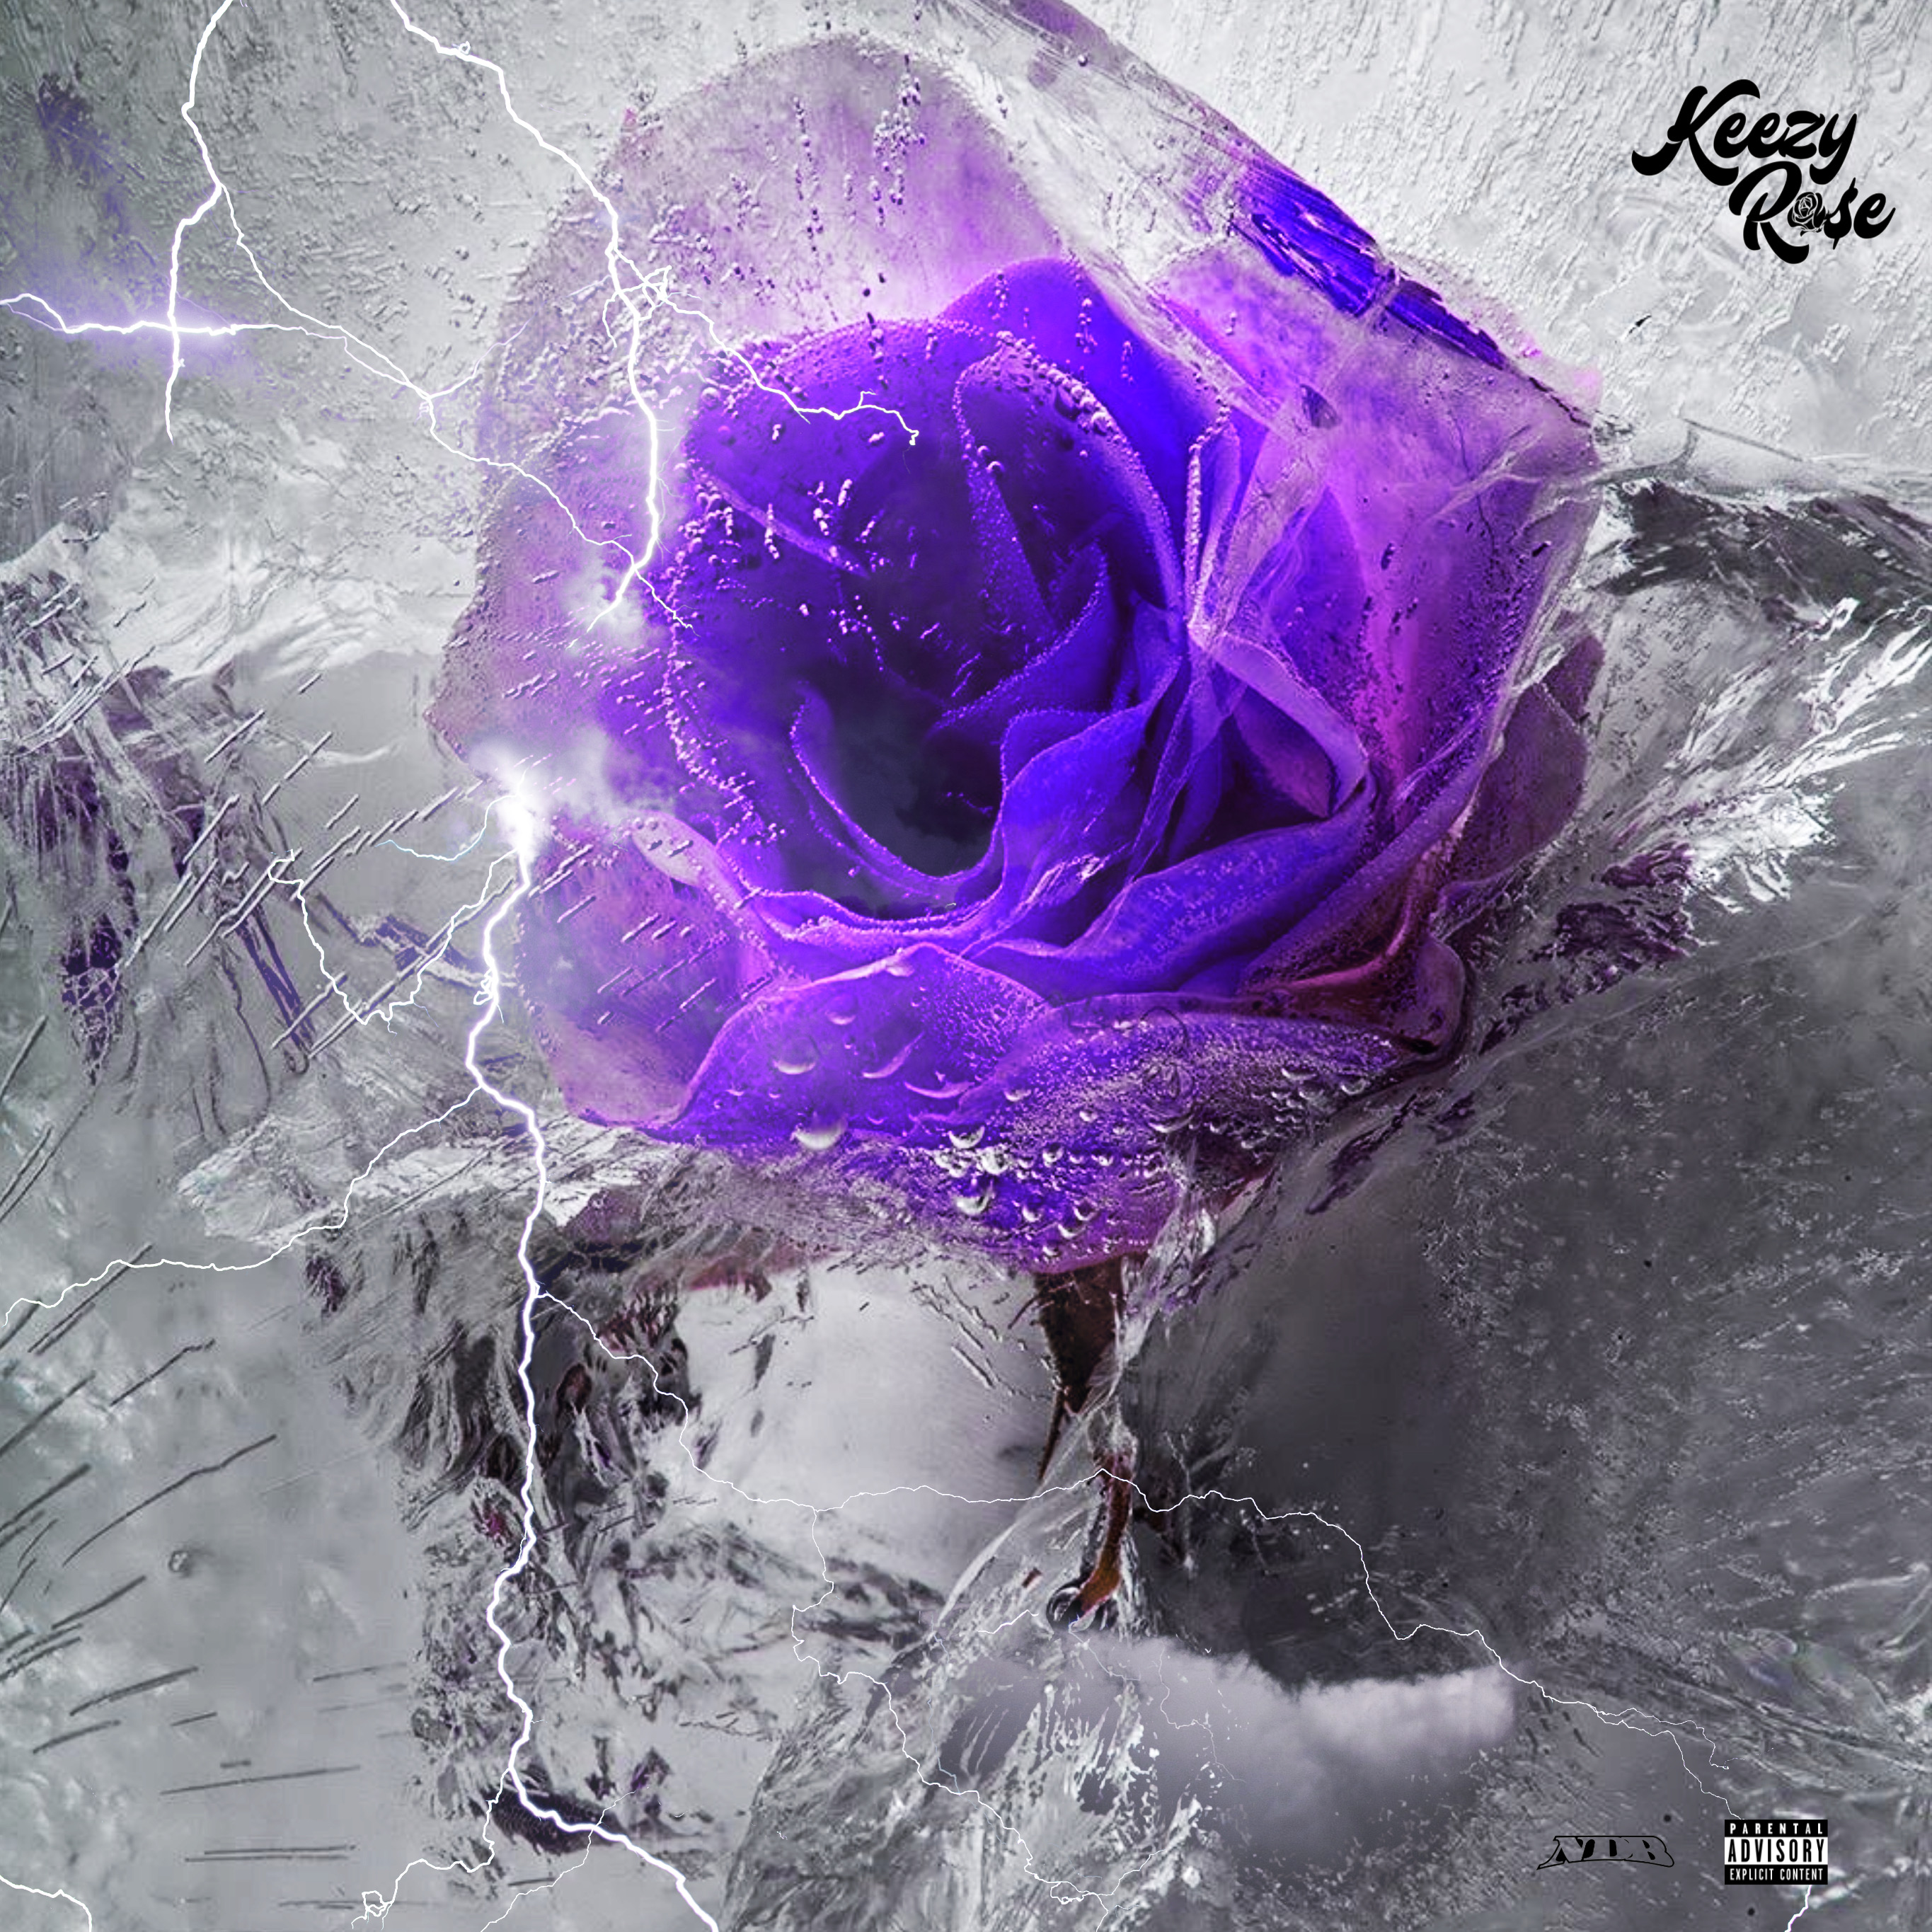 Keezy Rose - Froze Mode Cover Art